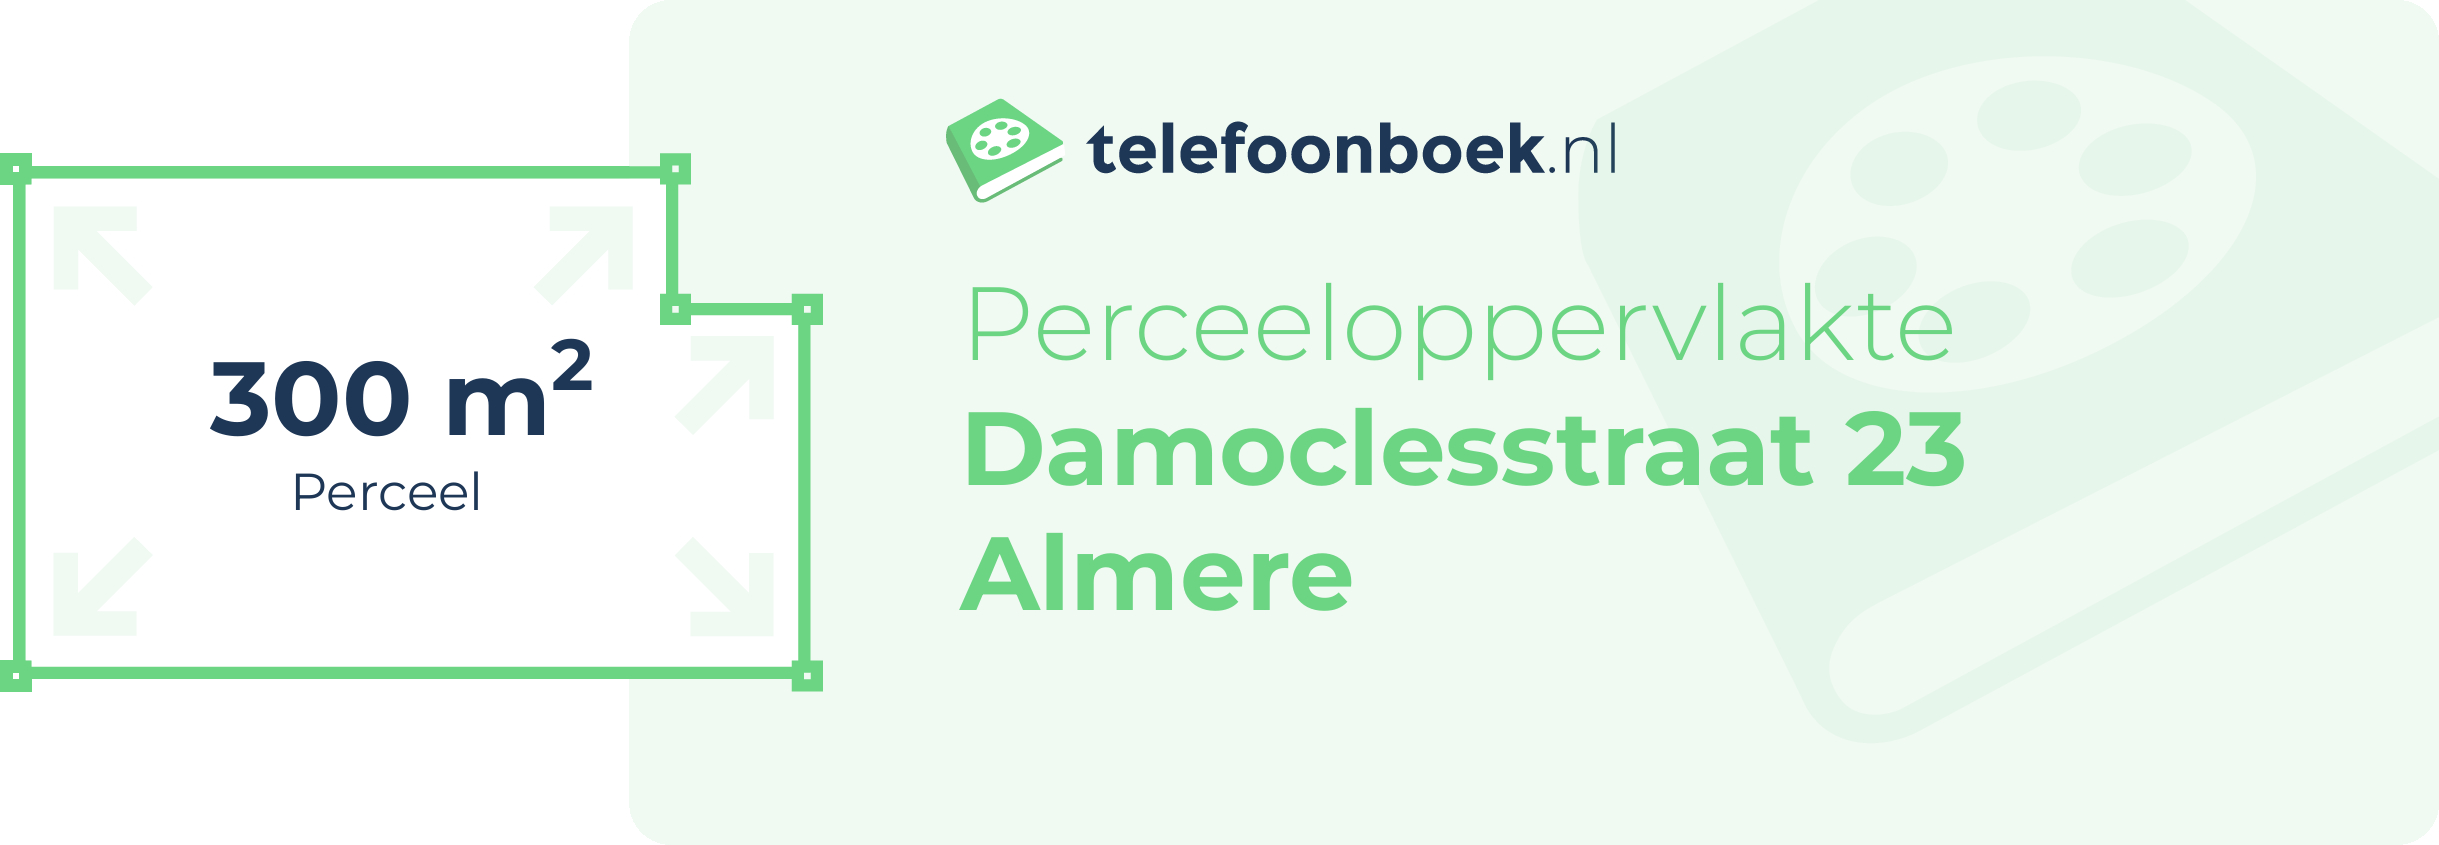 Perceeloppervlakte Damoclesstraat 23 Almere